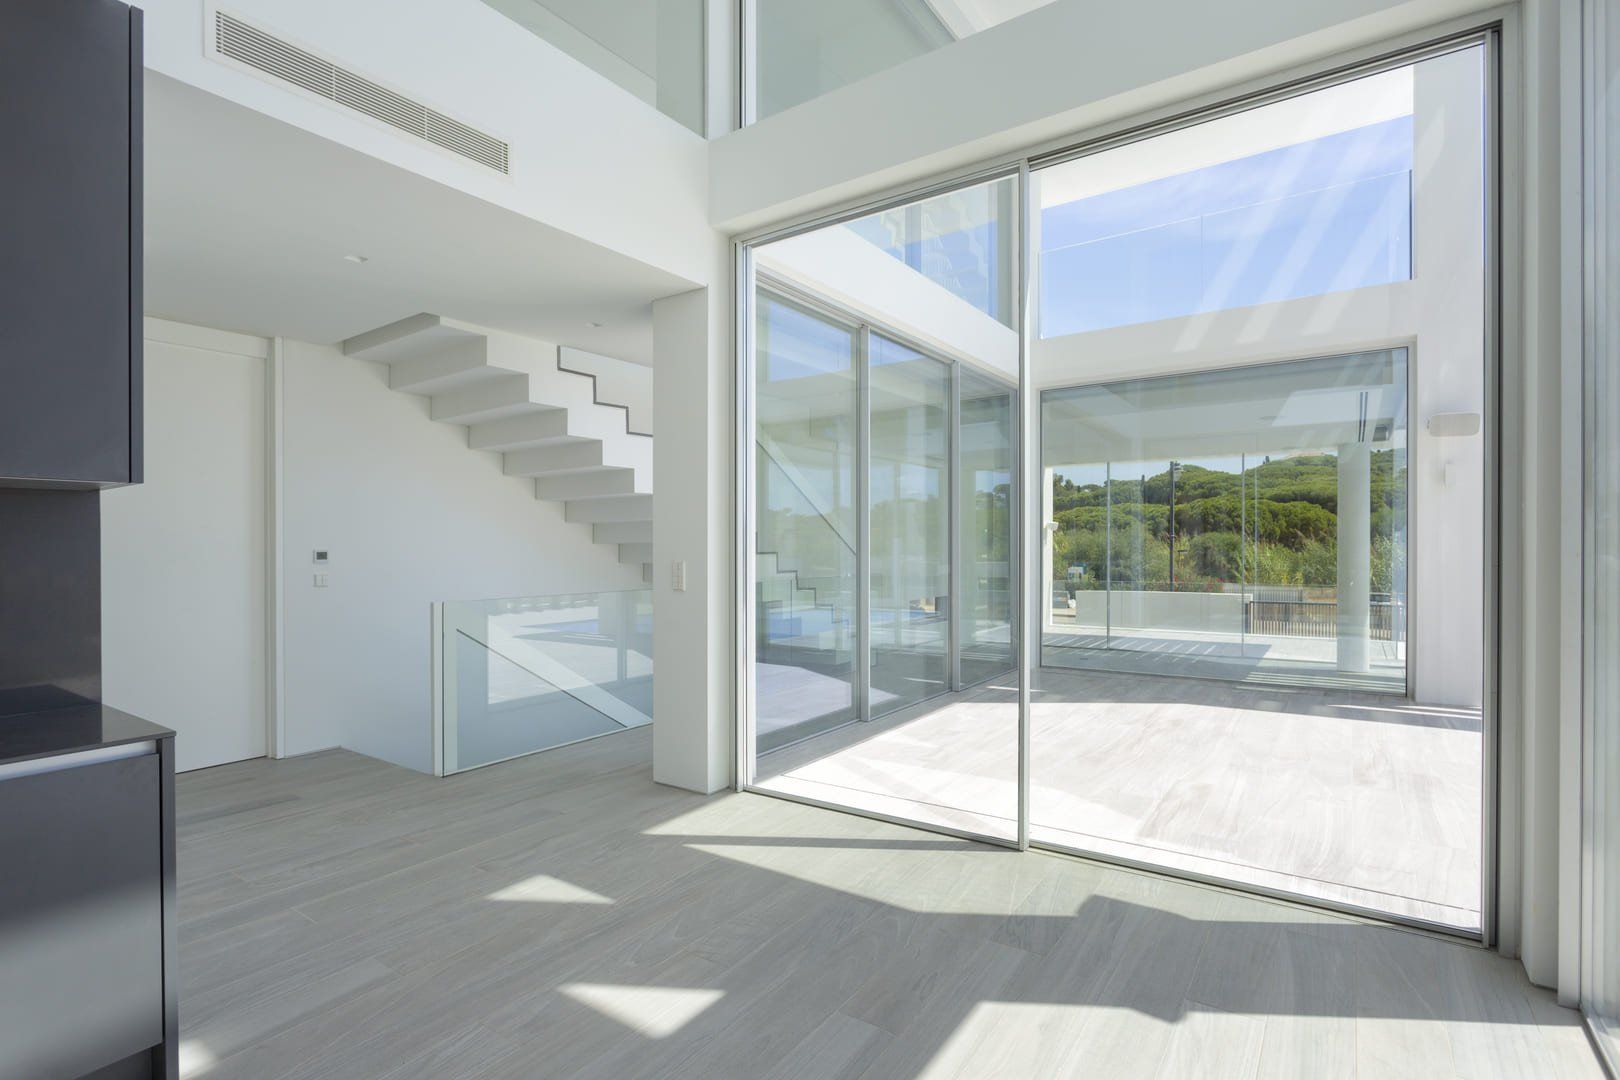 Modern house with an elegant design and minimalist frame windows